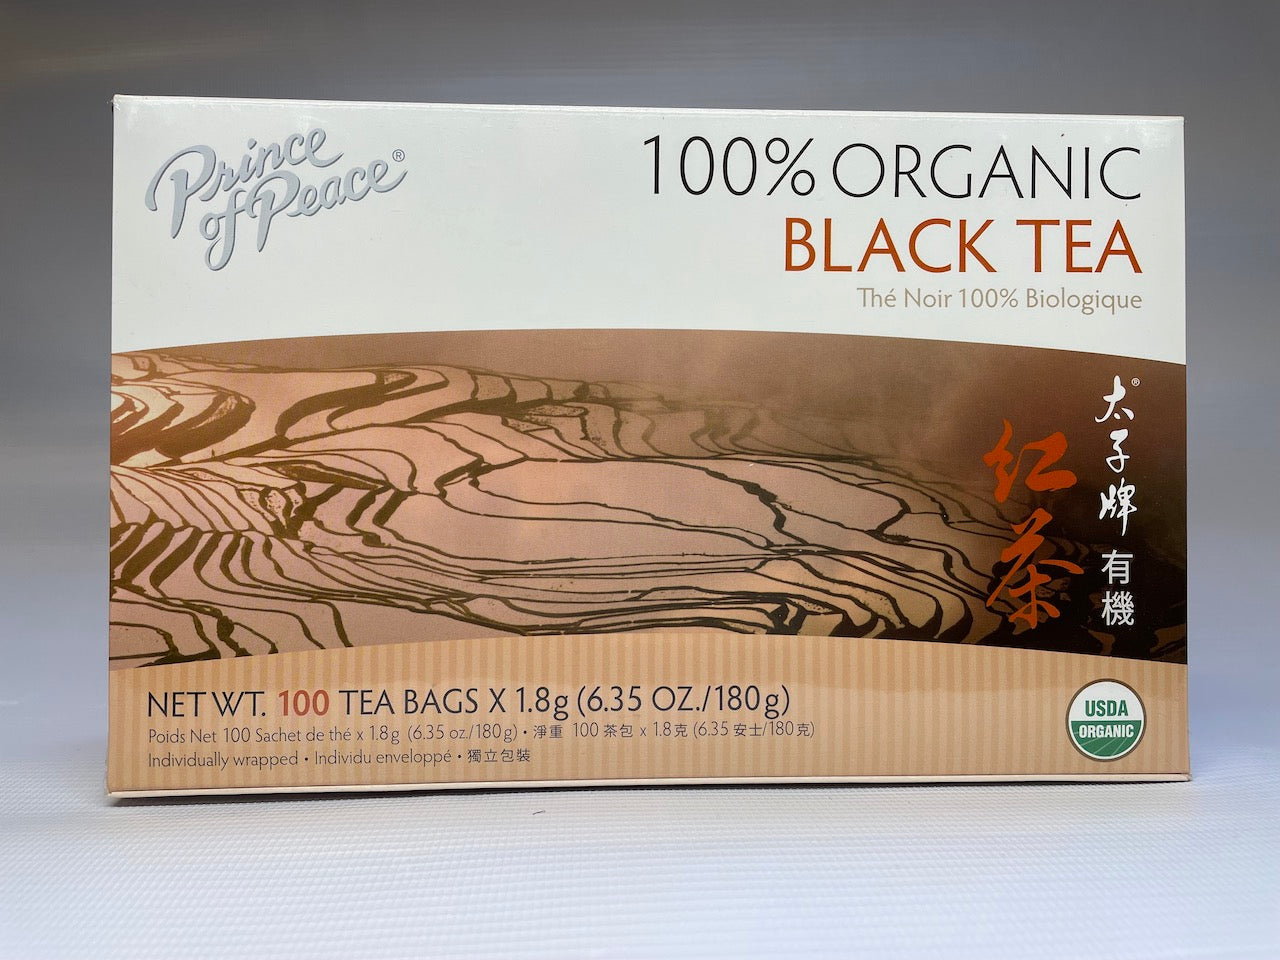 Prince of Peace 100% ORGANIC BLACK TEA 太子牌有机红茶 (100 Tea Bags)